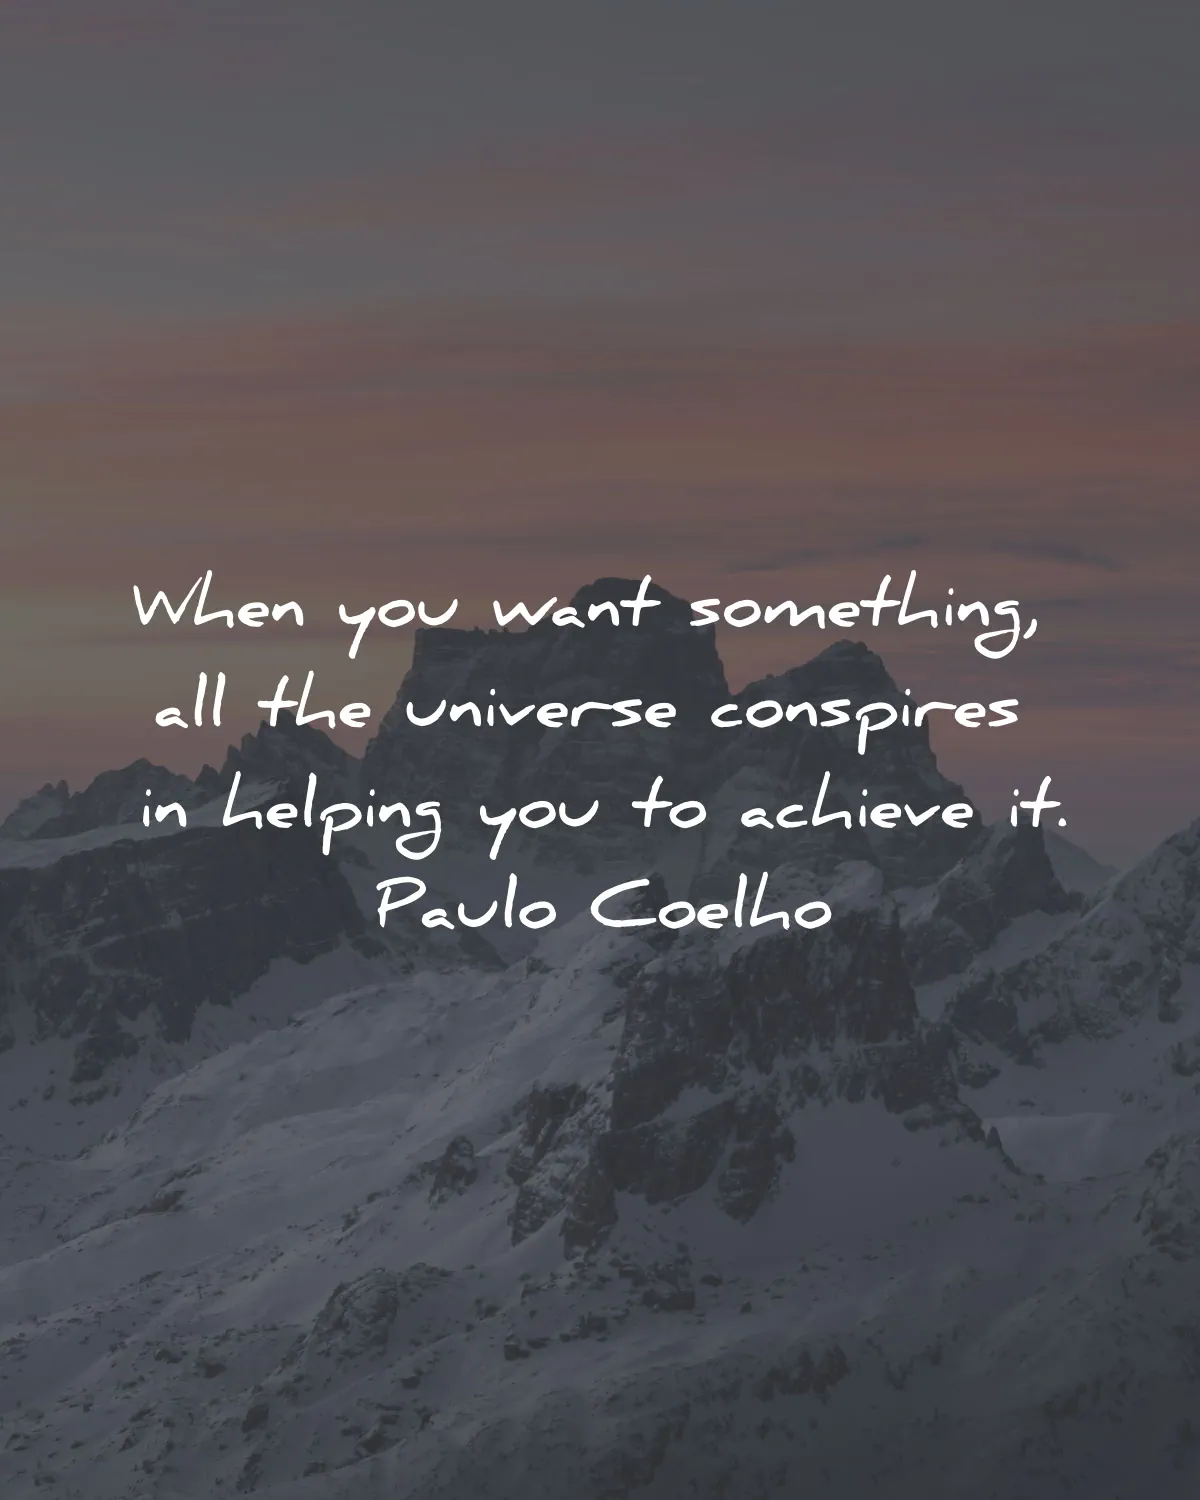 the alchemist quotes paulo coelho wisdom quotes want something universe conspires achieve wisdom